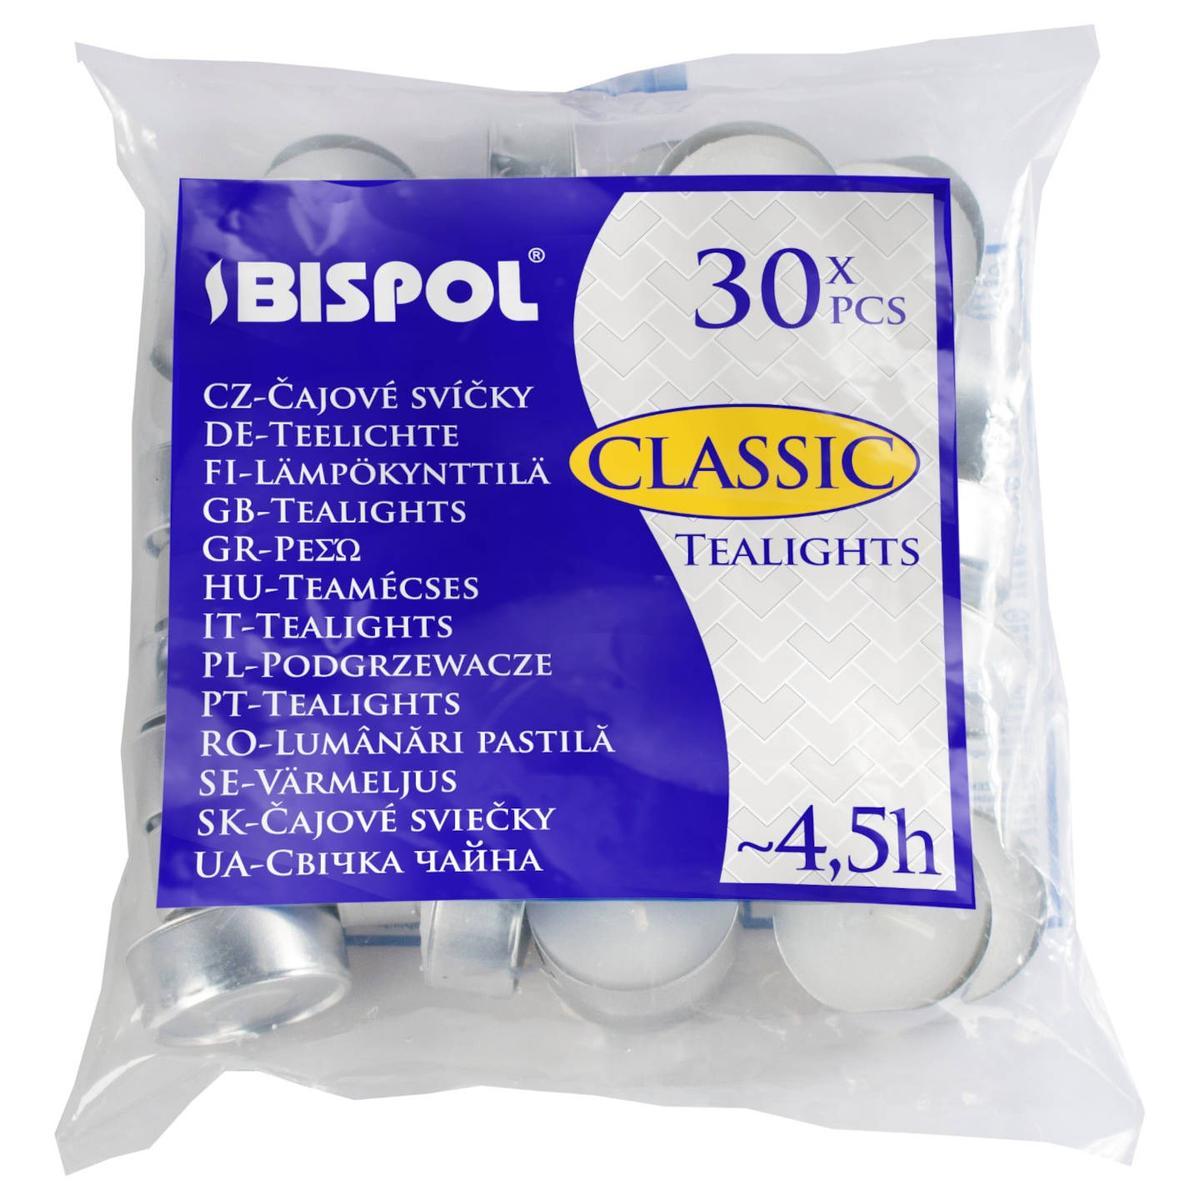 Podgrzewacze Bispol Classic Tealights 4,5h 30 sztuk nr. 1